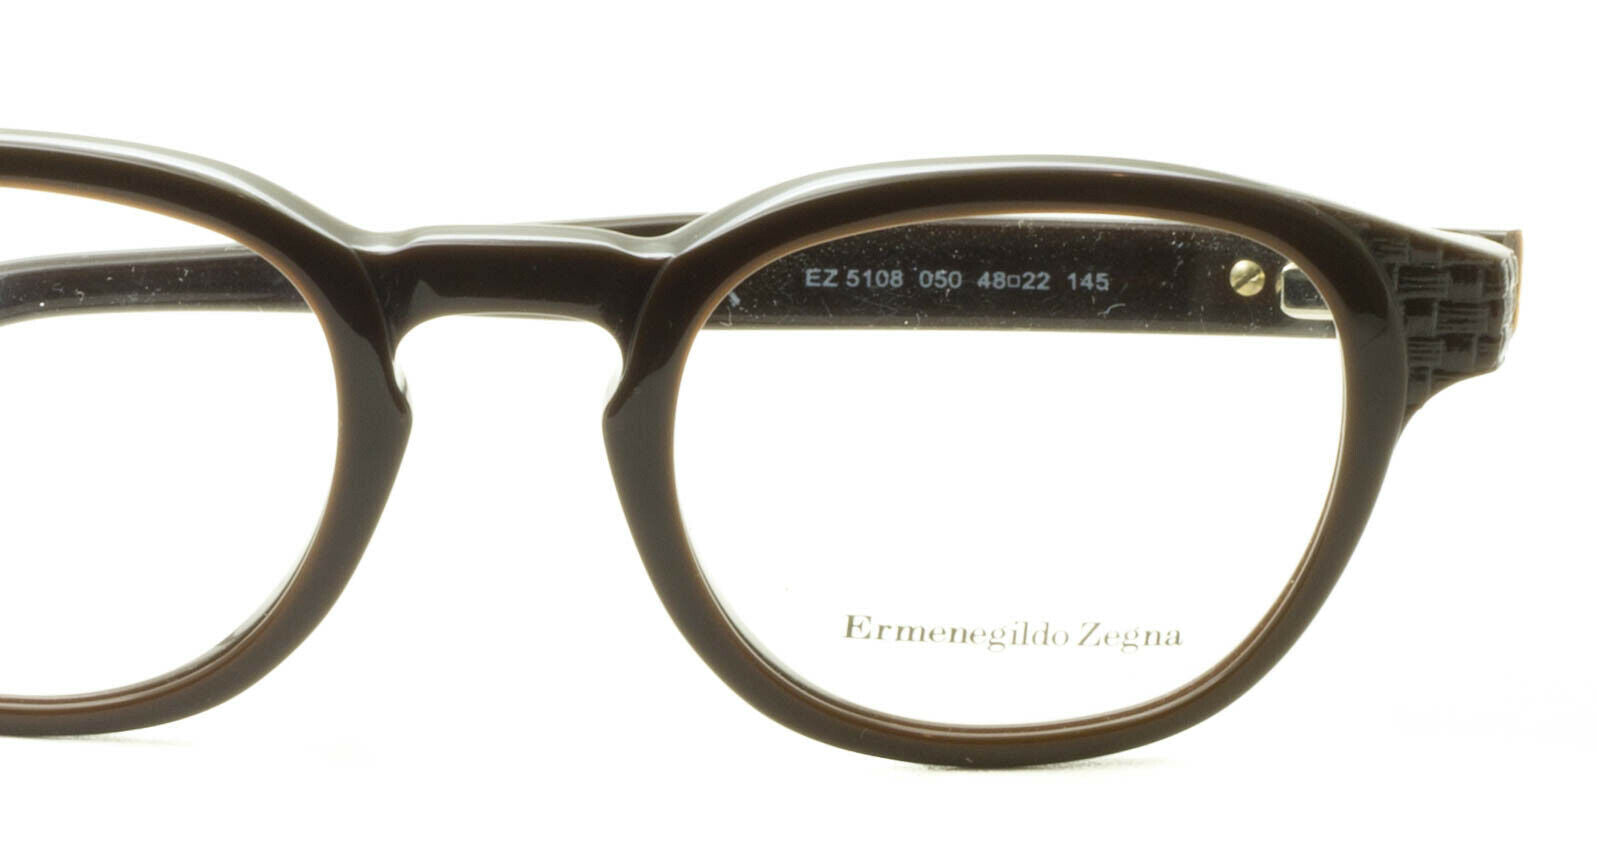 ERMENEGILDO ZEGNA EZ 5108 050 48mm FRAMES Glasses Eyewear RX Optical New - Italy